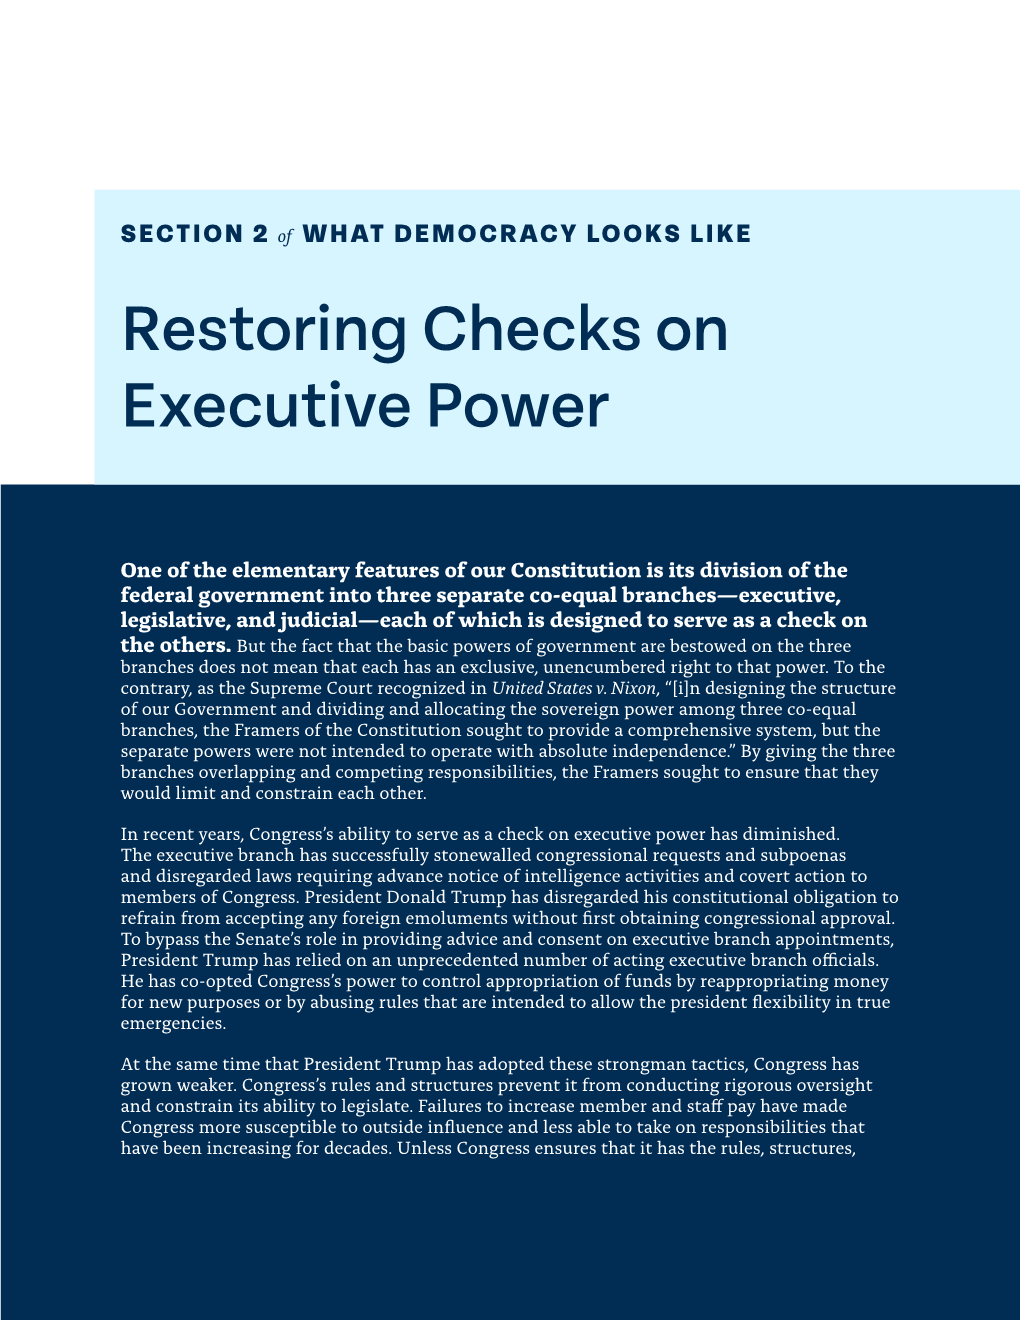 Restoring Checks on Executive Power